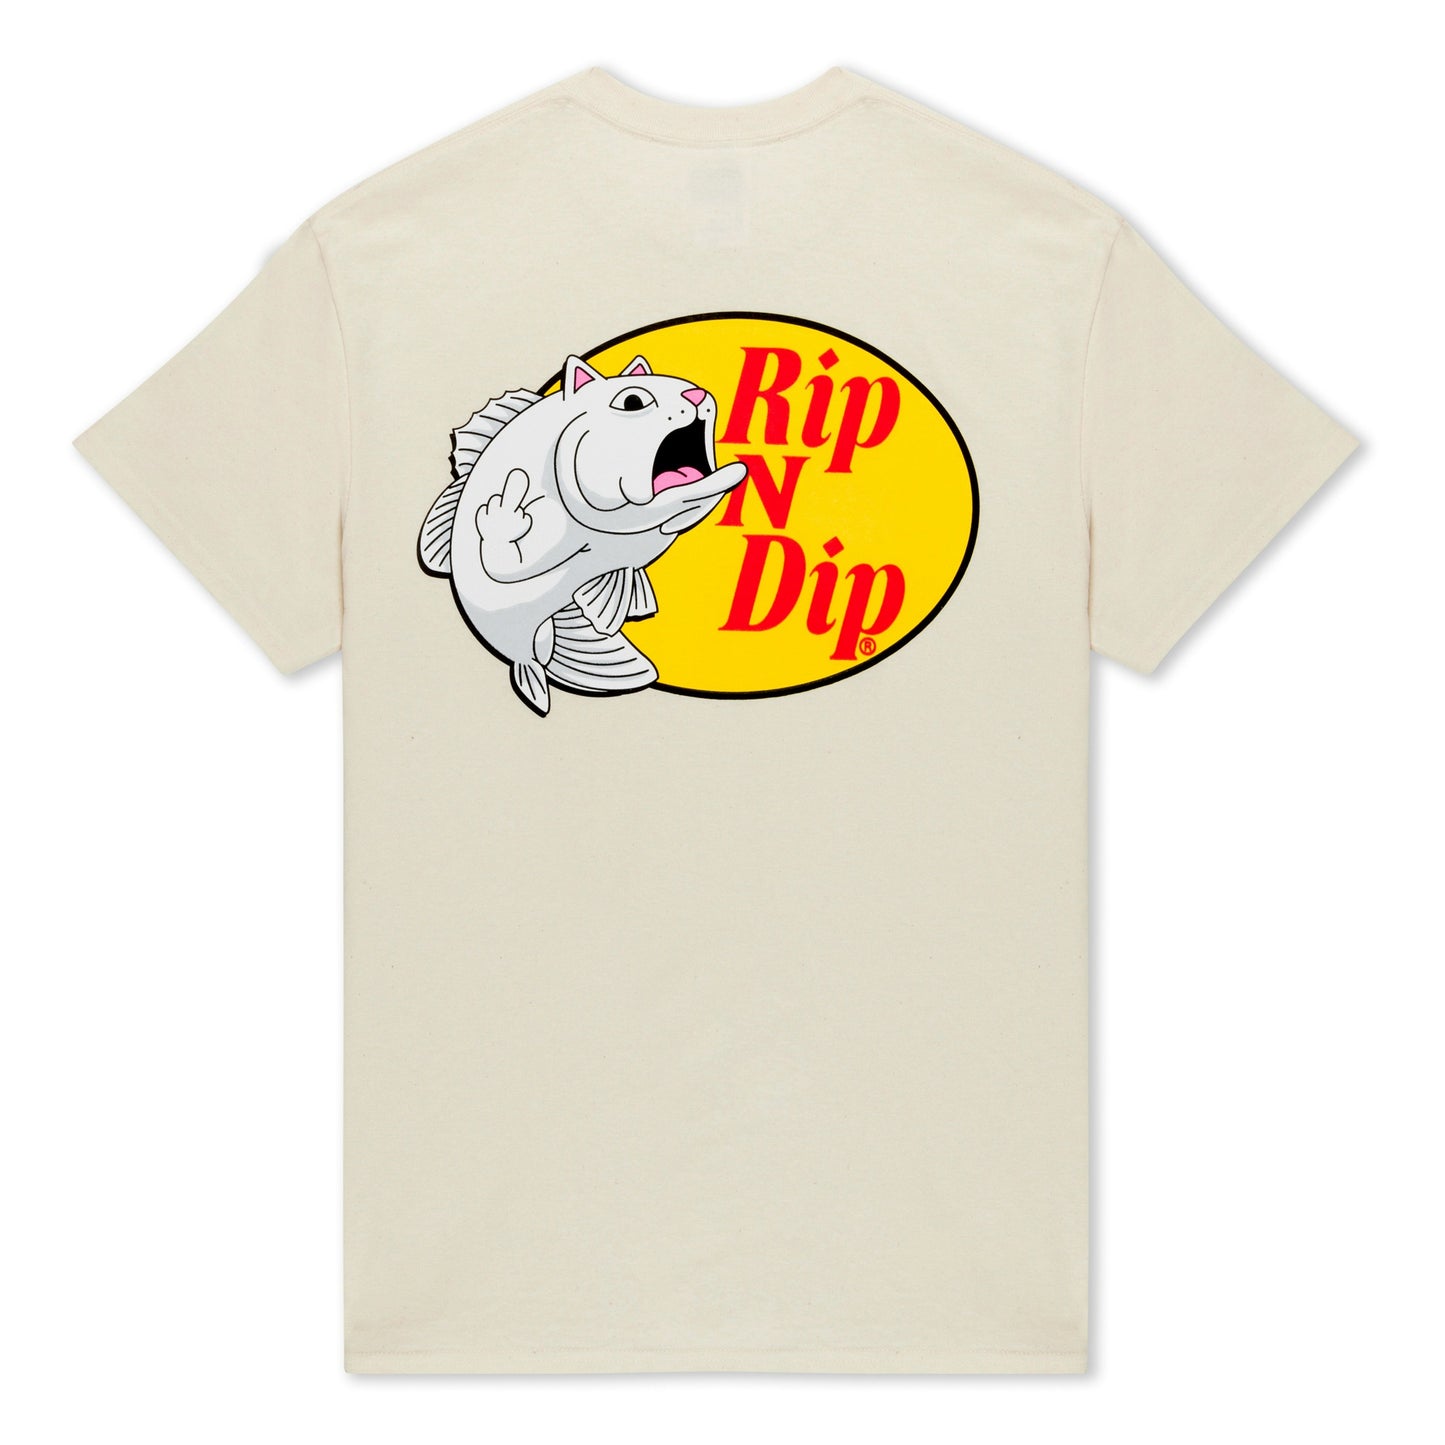 Ripndip Catfish T-shirt (Natural)